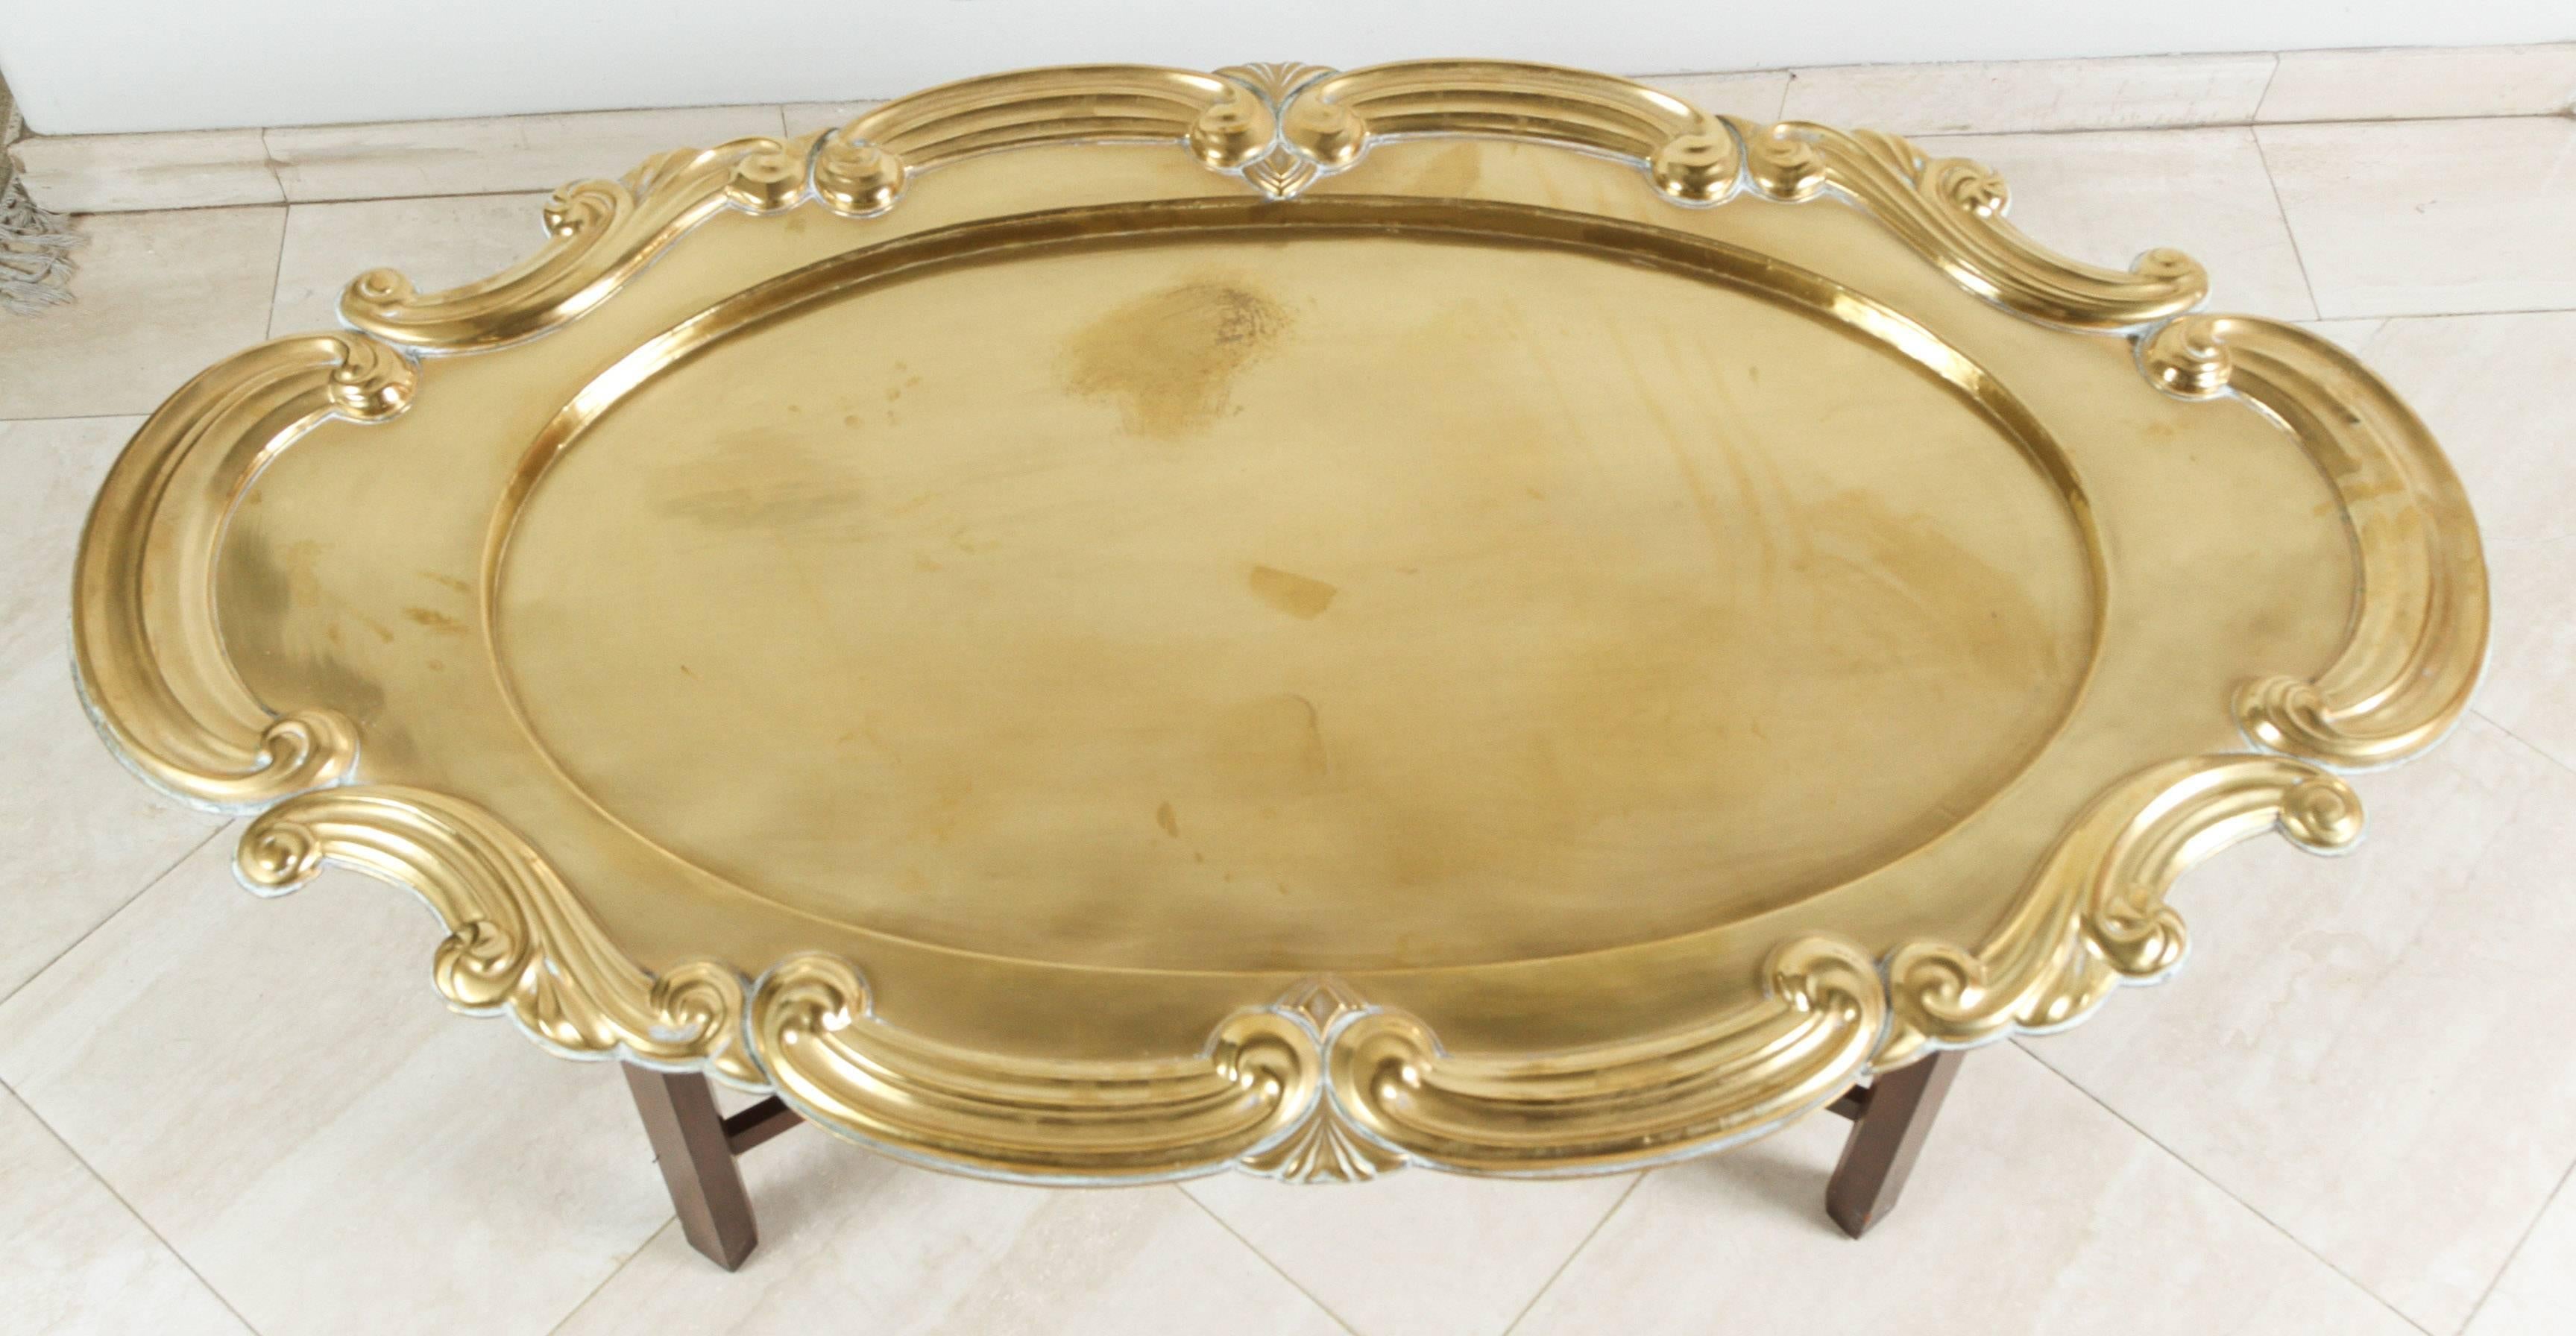 Polished Hollywood Regency Vintage Oval Brass Tray Moorish Table For Sale